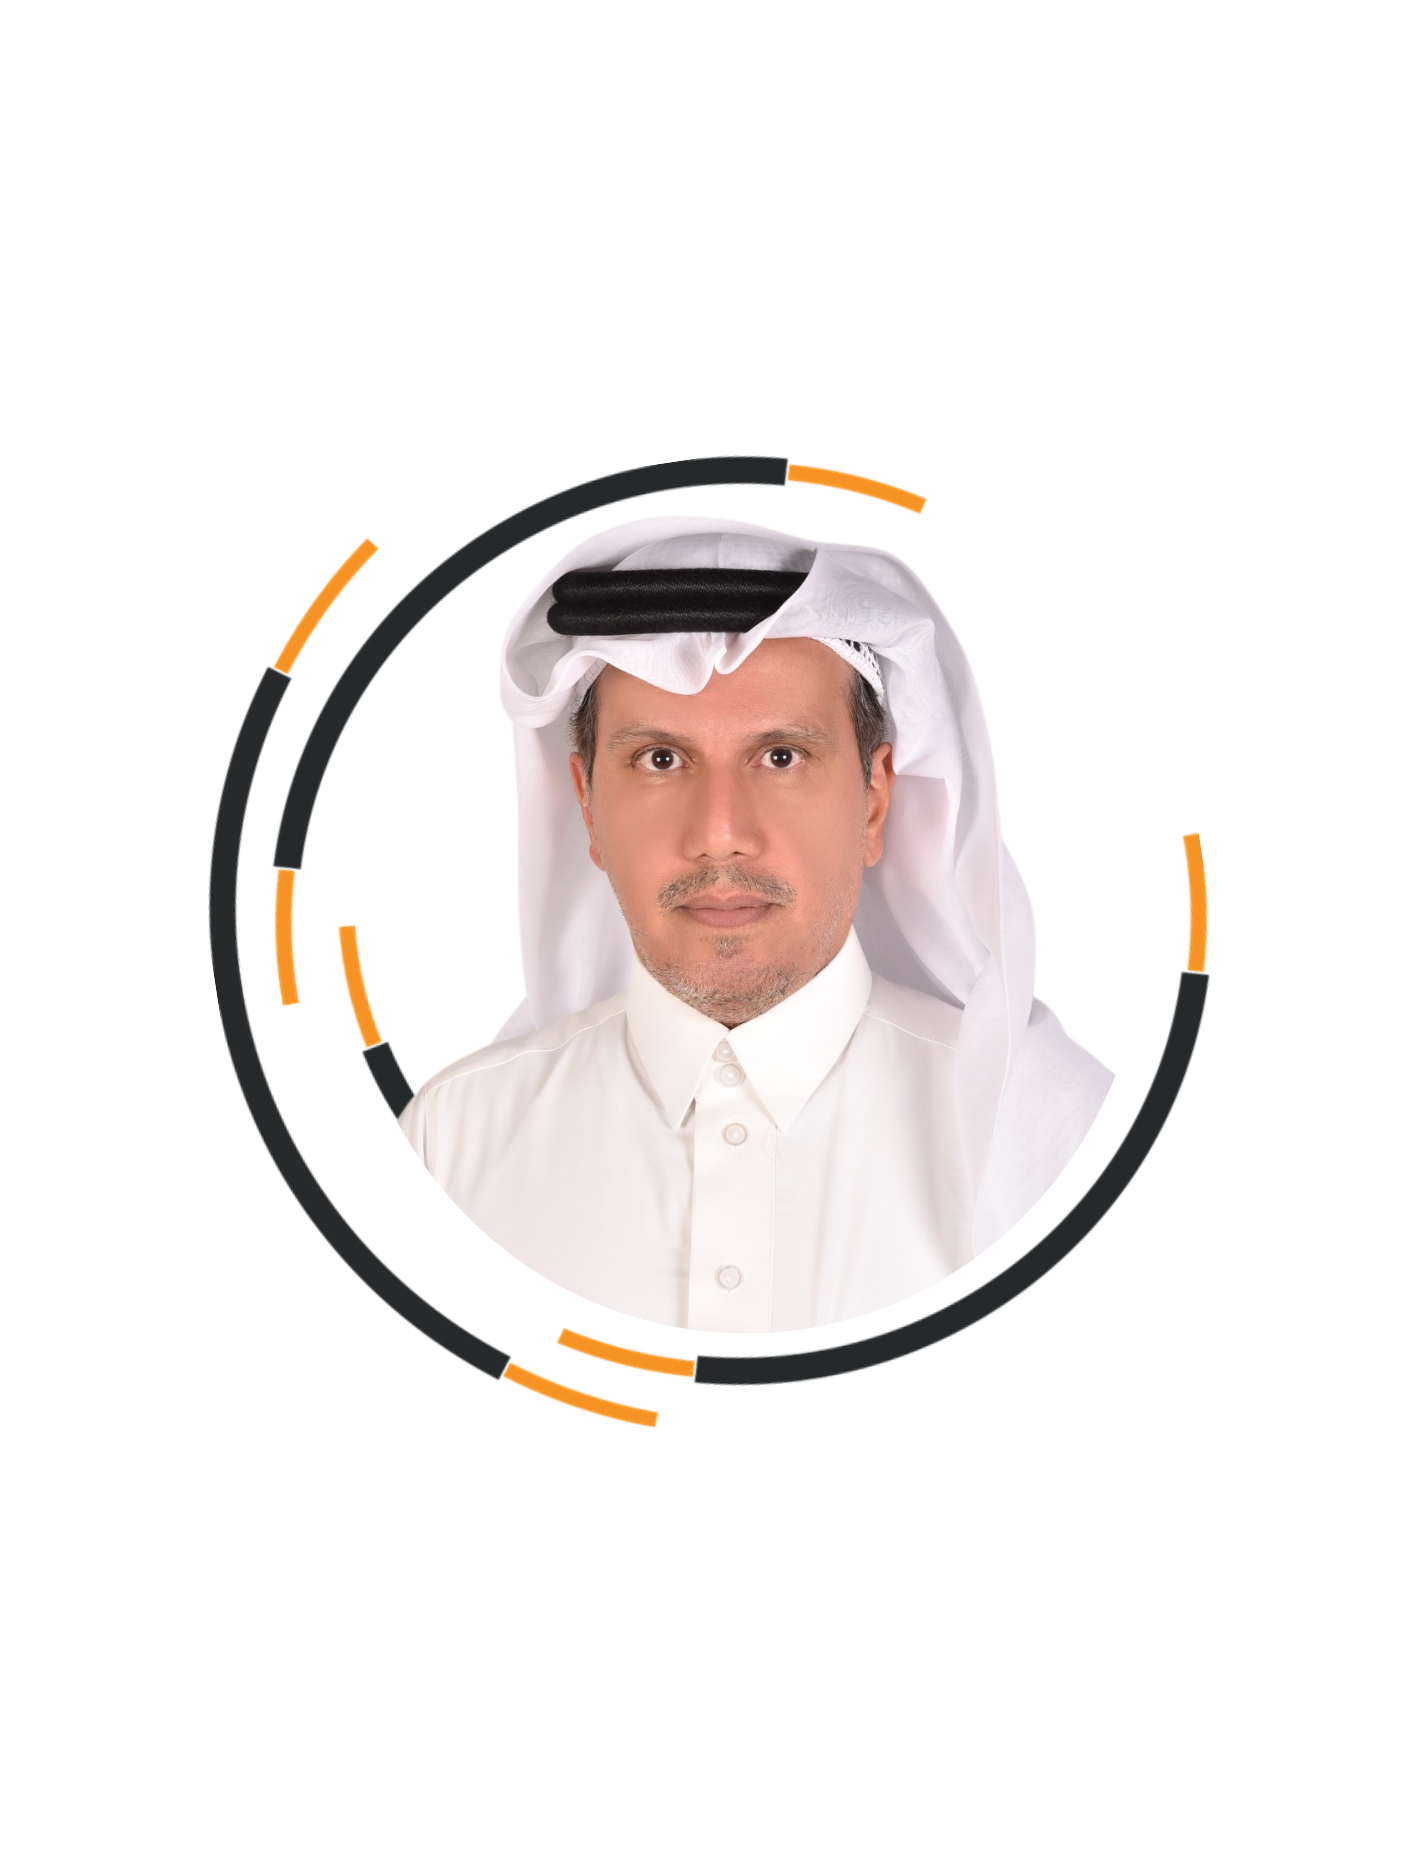 Eng. Walid bin Abdulaziz Alshowaier